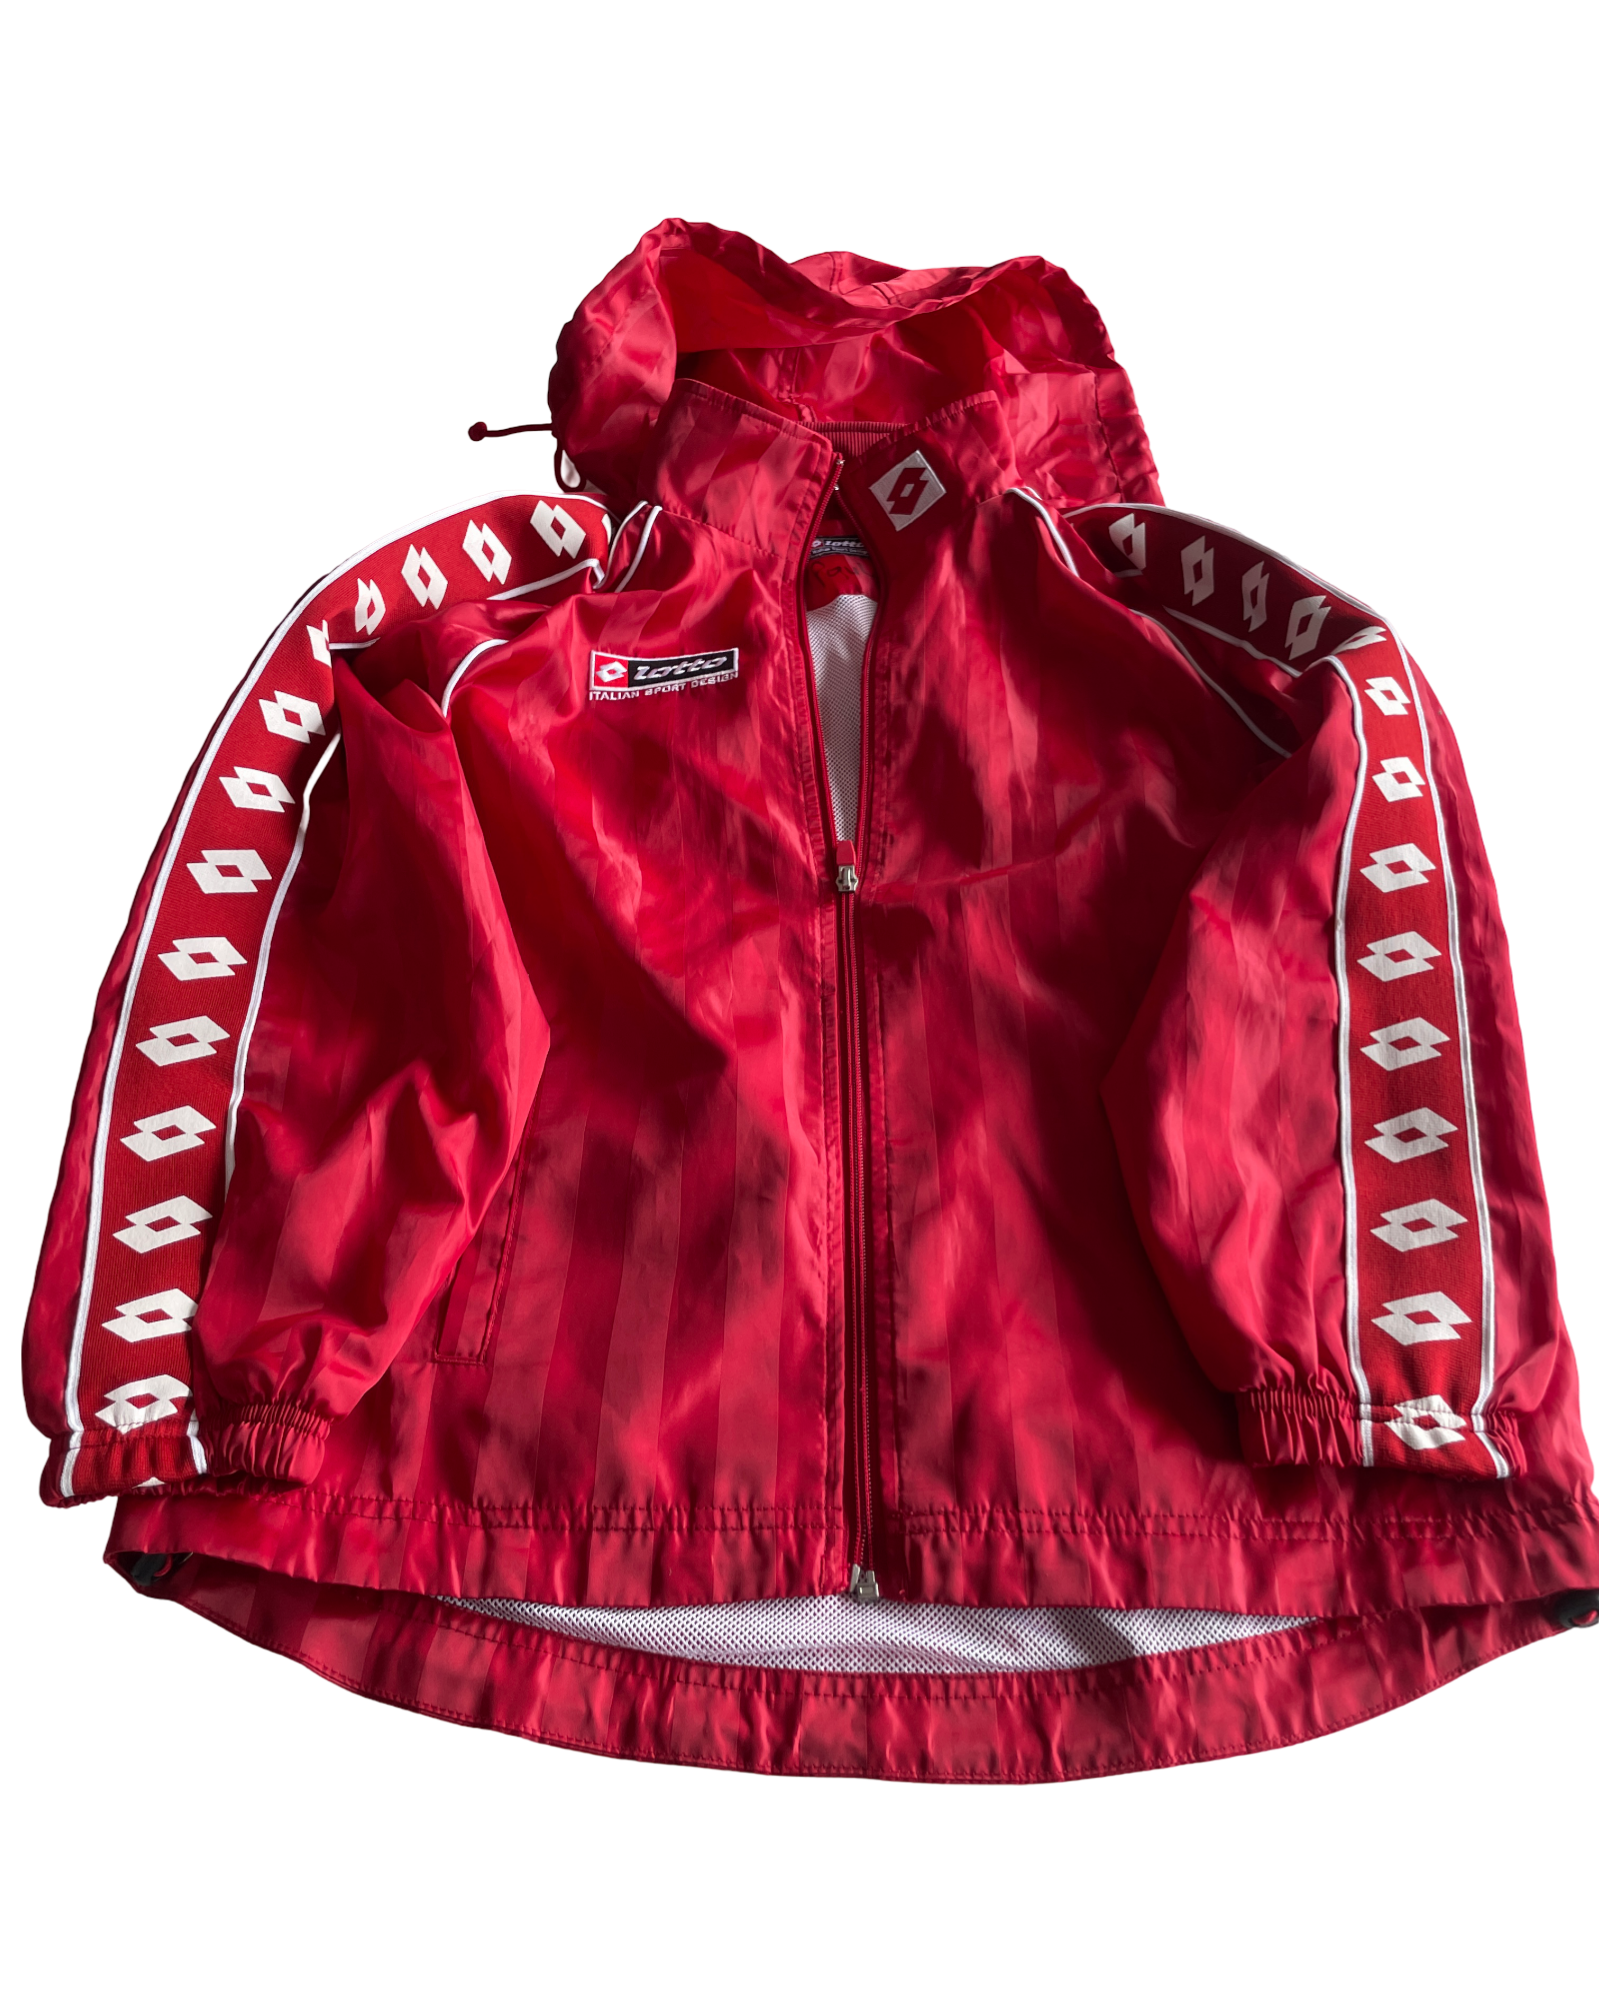 Vintage Women's lotto Italian Riding Jacket - Red, Size M/L (SKU 4625)